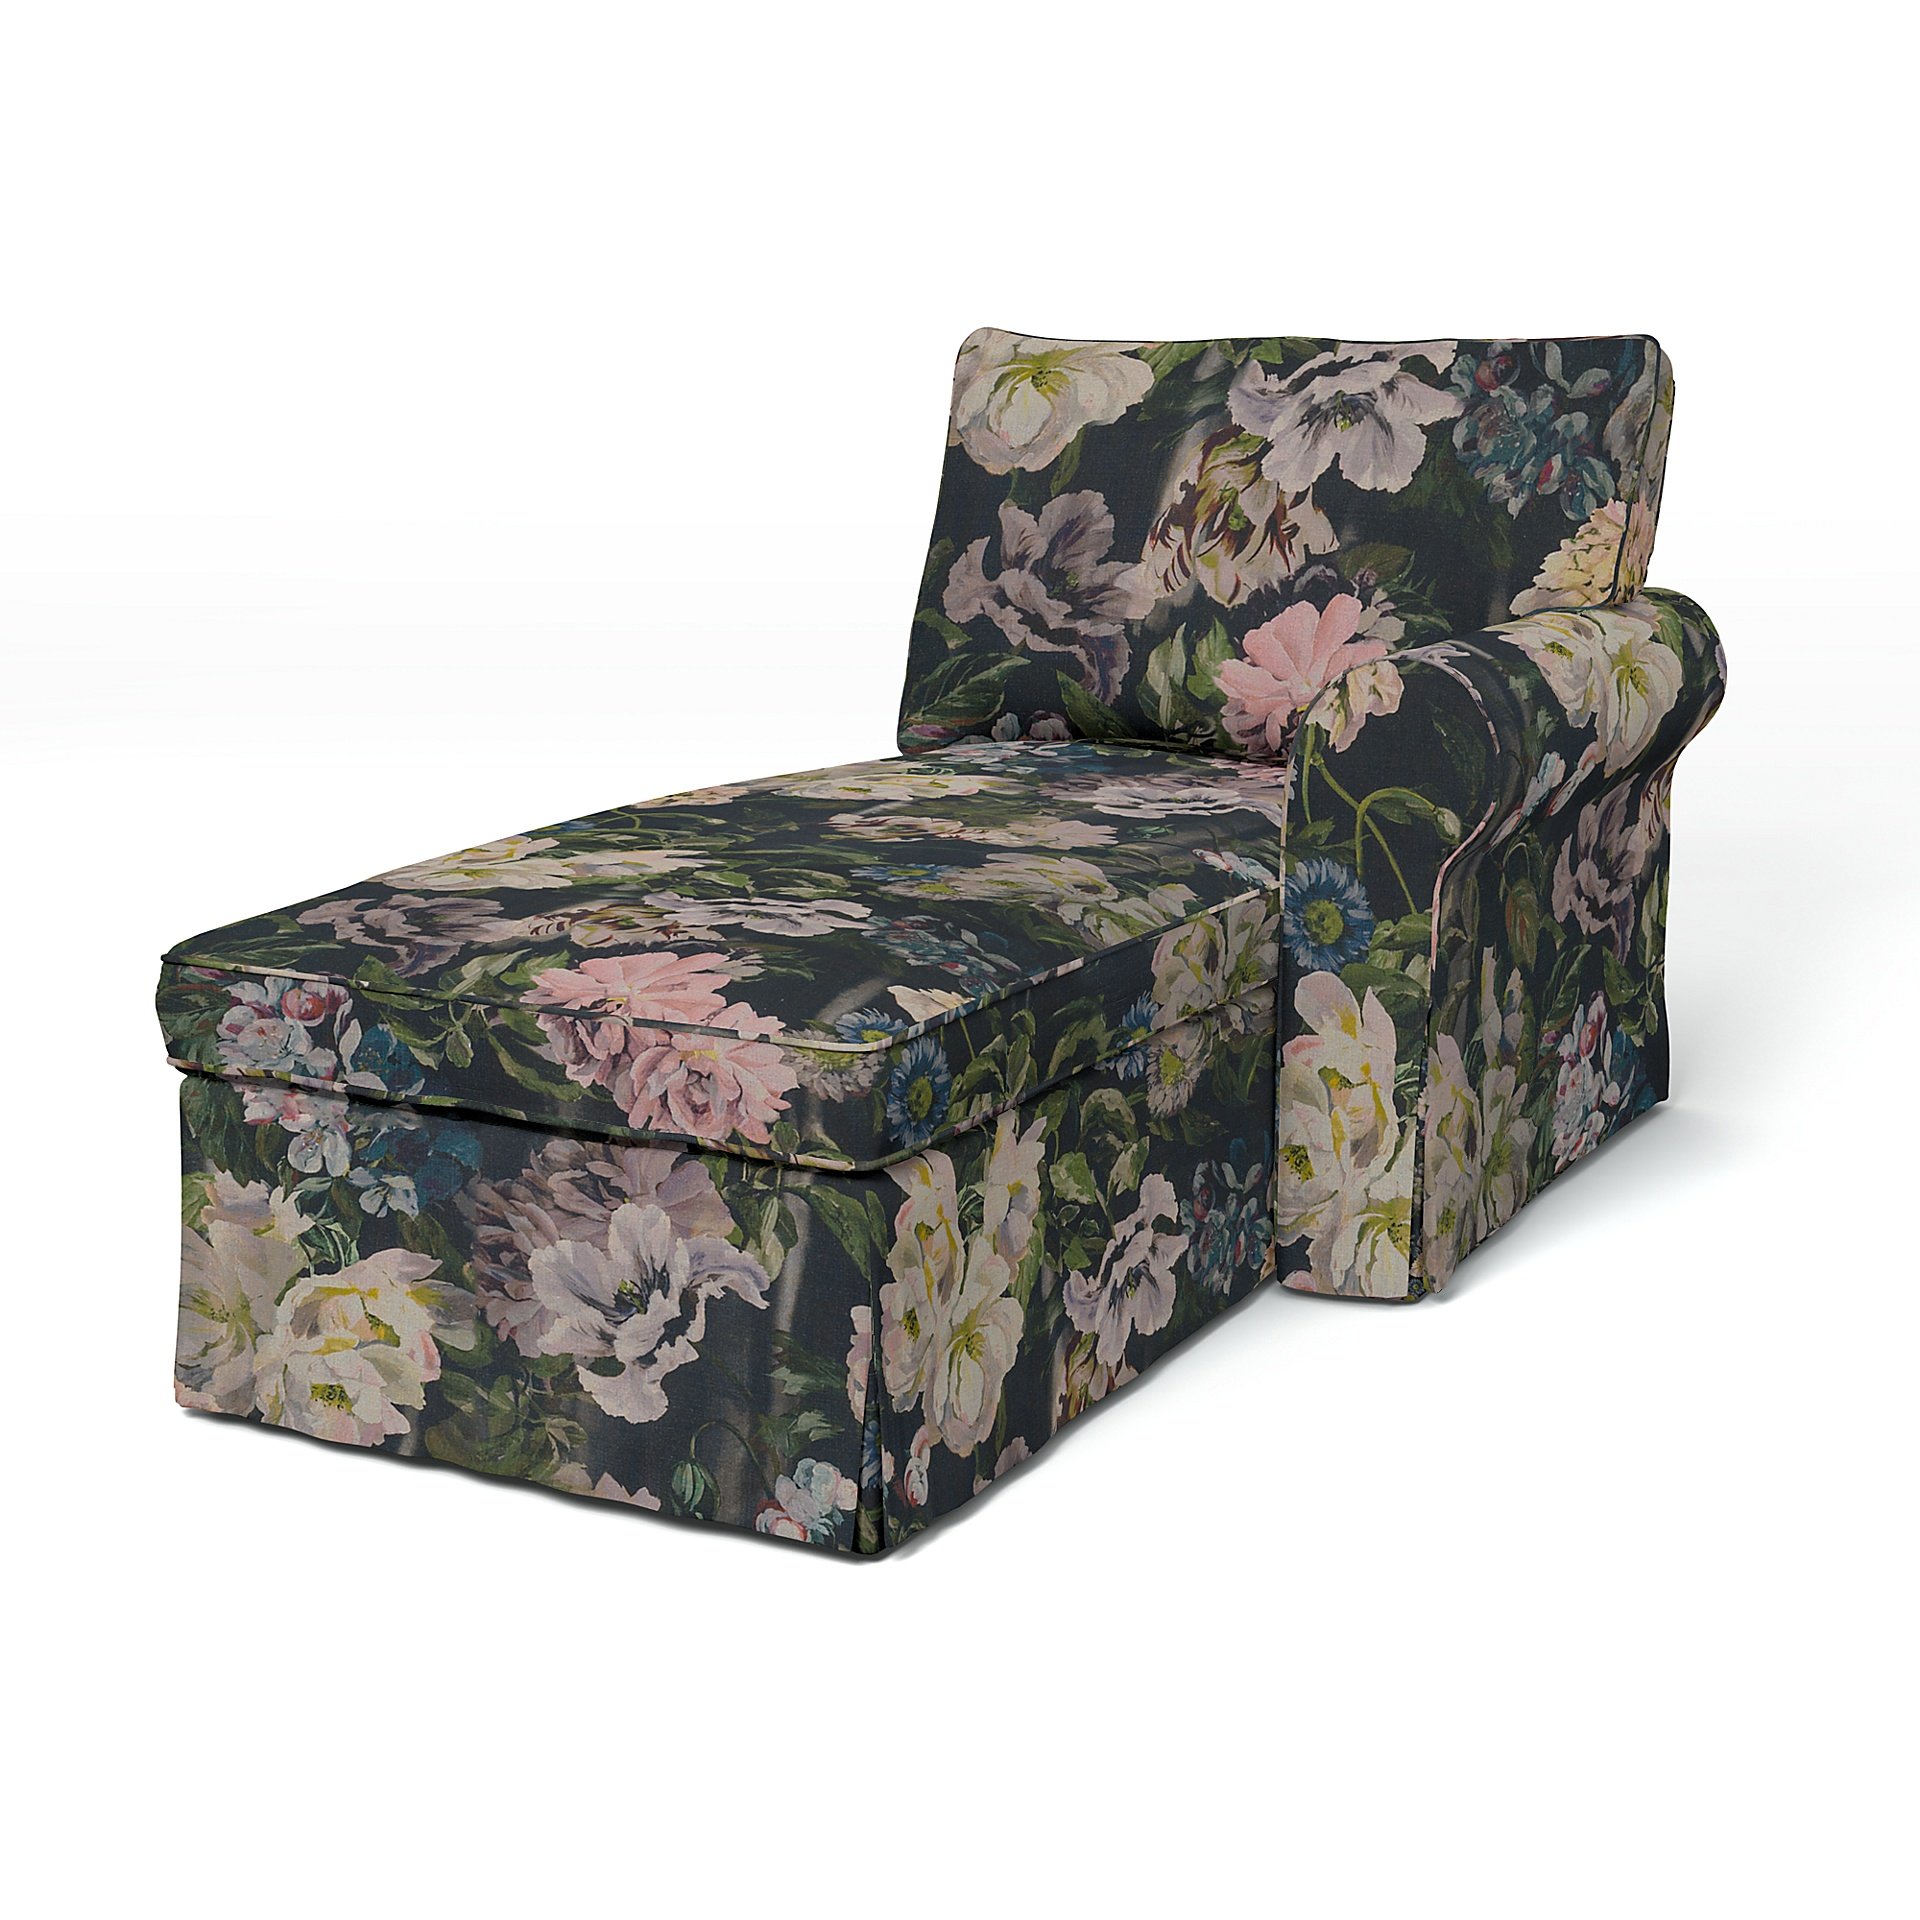 IKEA - Ektorp Chaise with Right Armrest Cover, Delft Flower - Graphite, Linen - Bemz